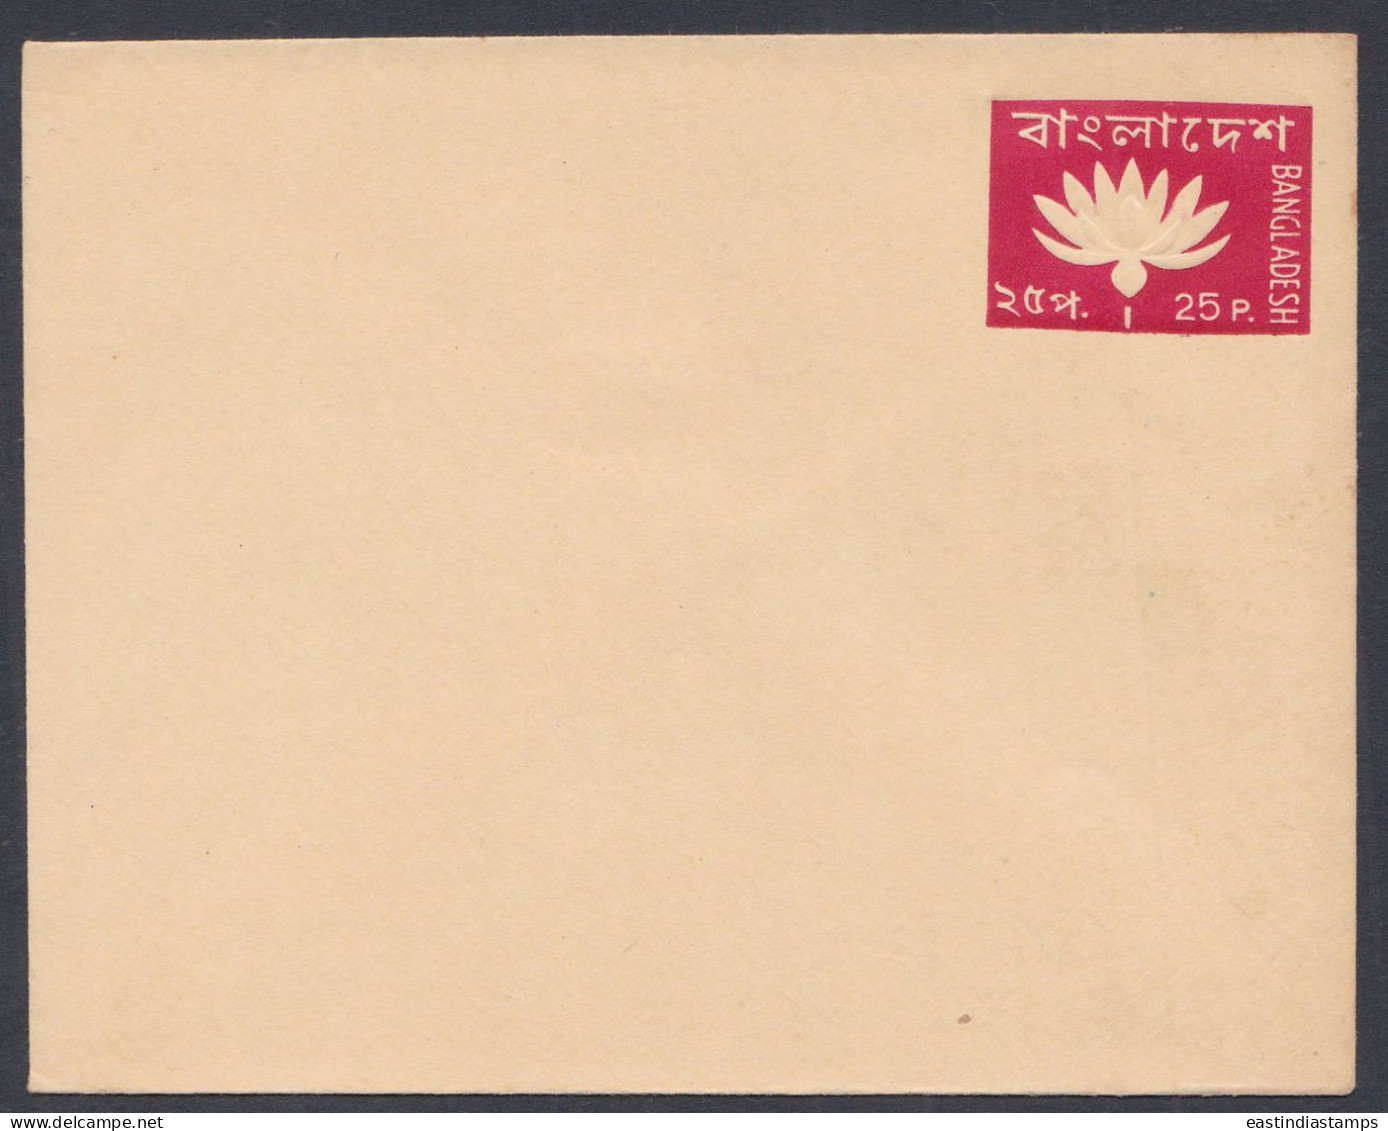 Bangladesh 25 Paisa Mint Postal Envelope, Cover, Postal Stationery - Bangladesh